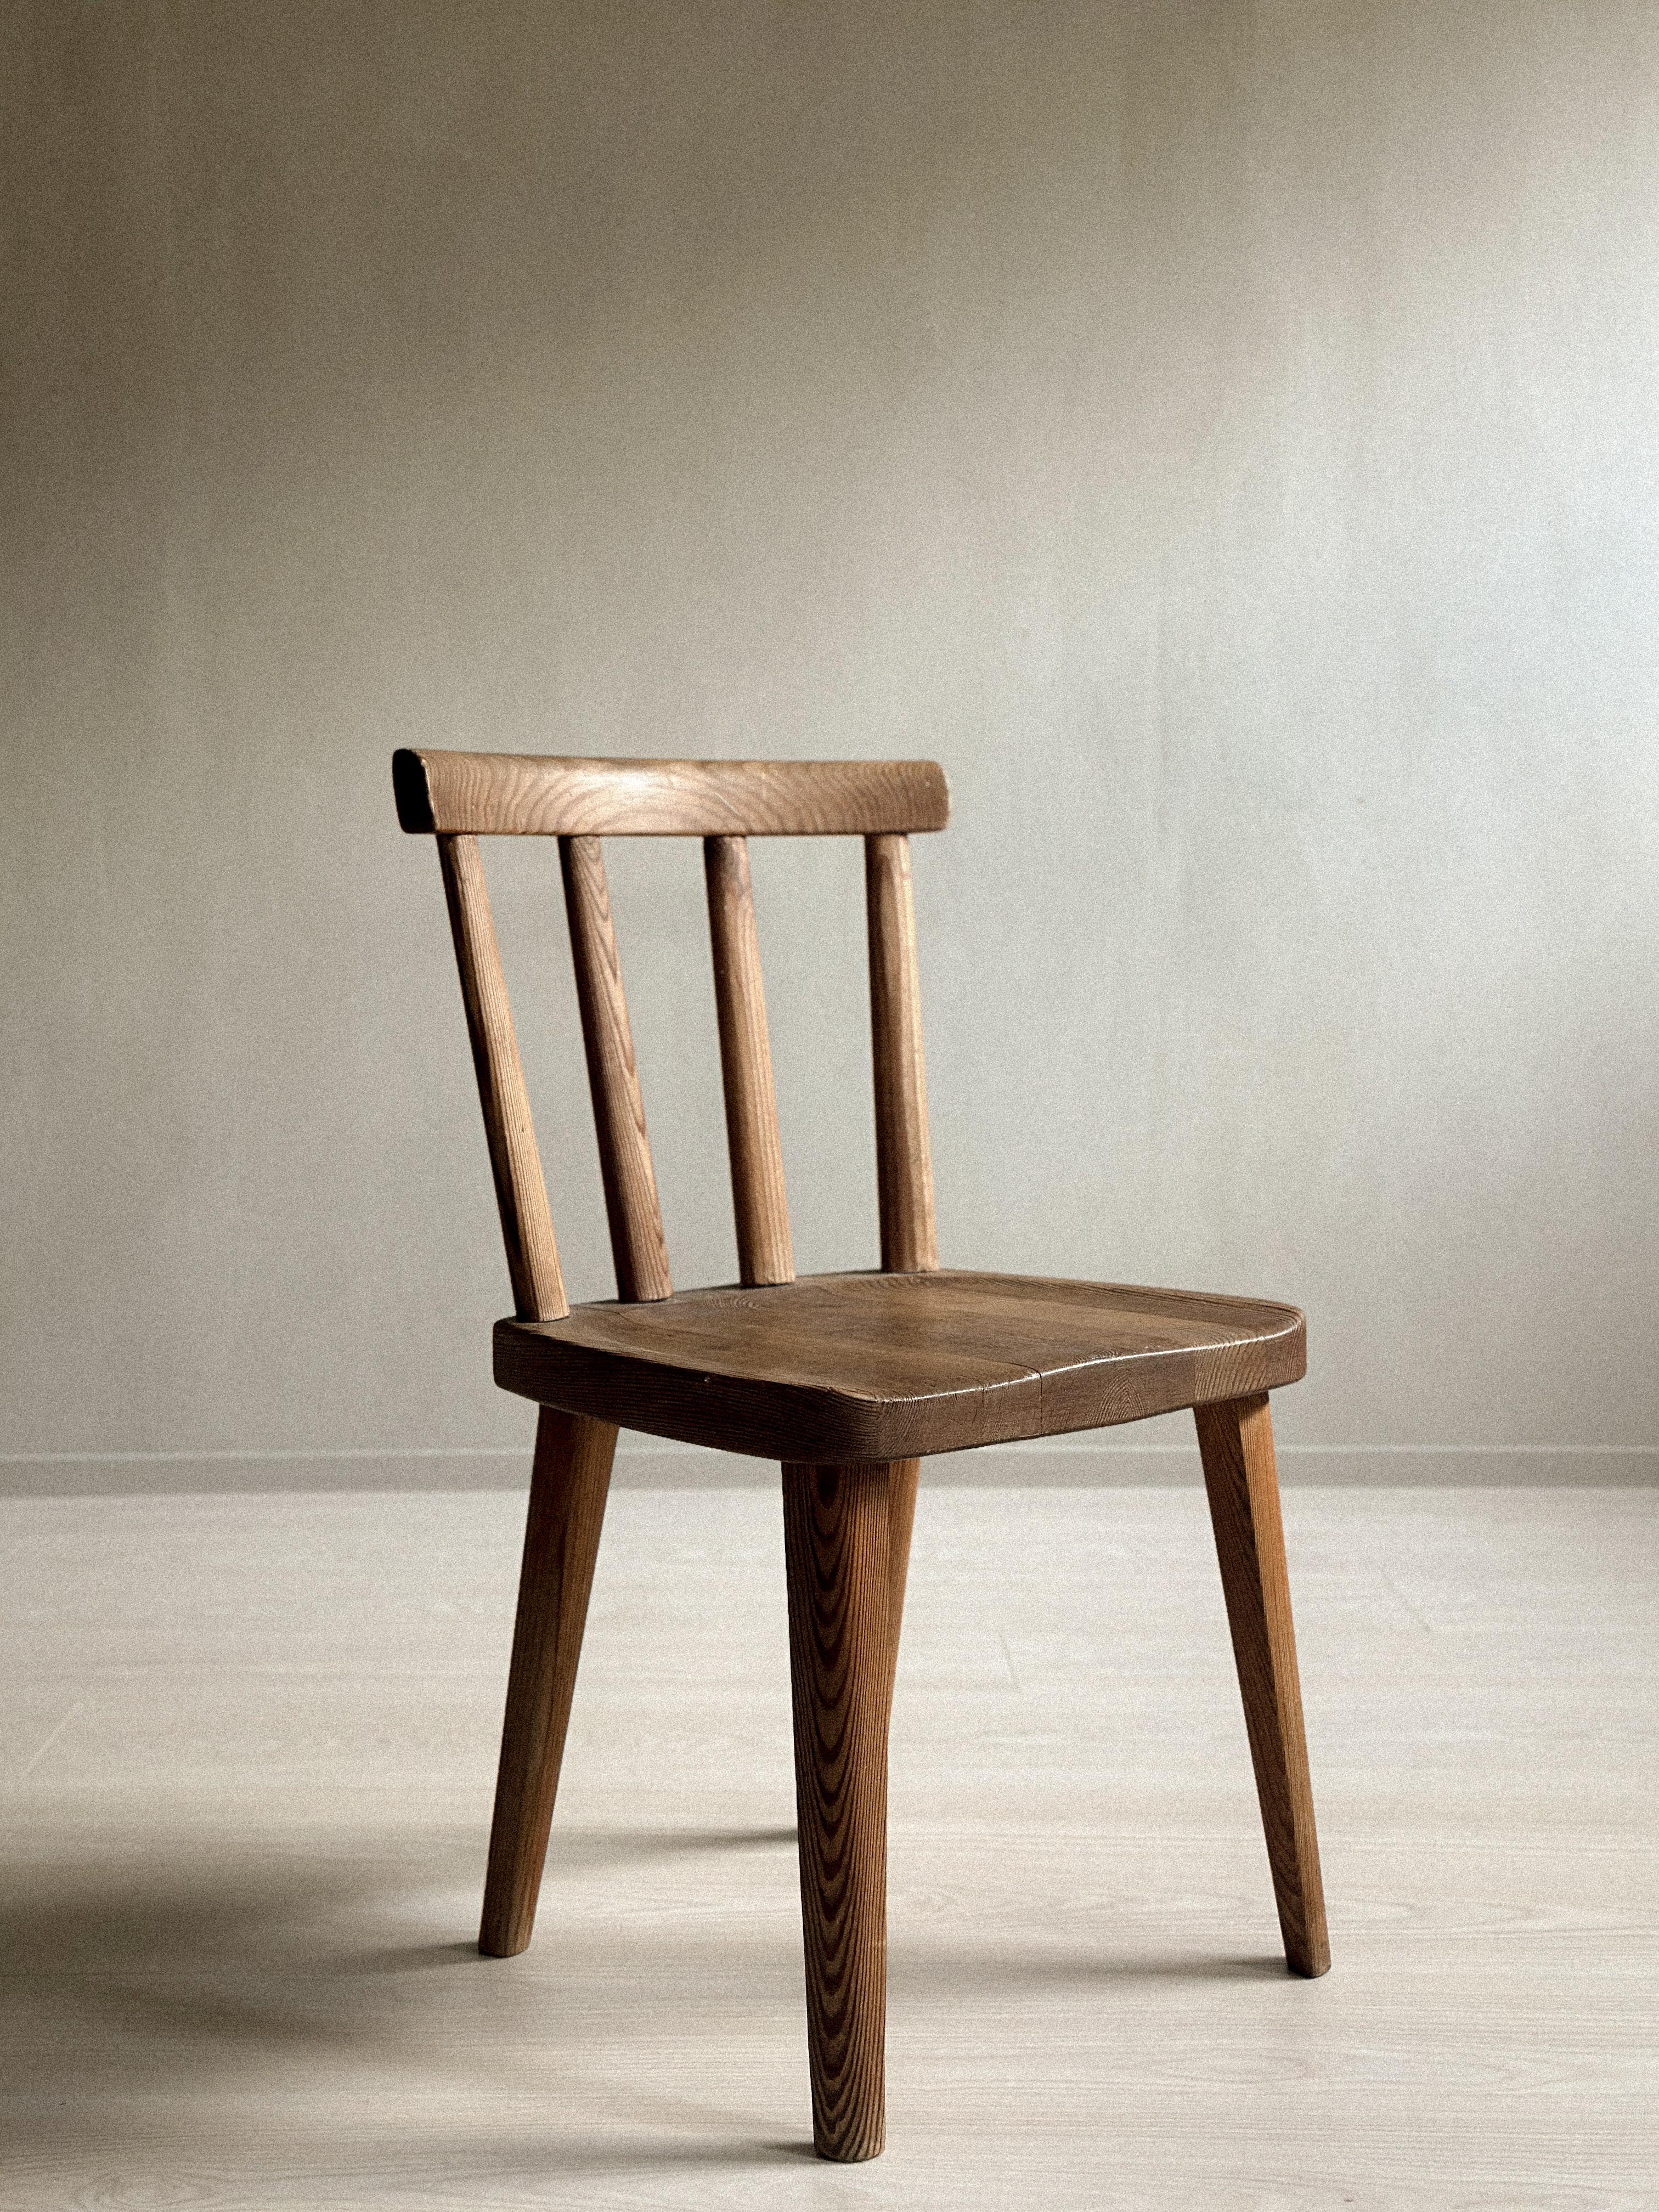 Swedish A single Utö Dining Chair by Axel Einar Hjorth for Nordiska Kompaniet, 1930s For Sale